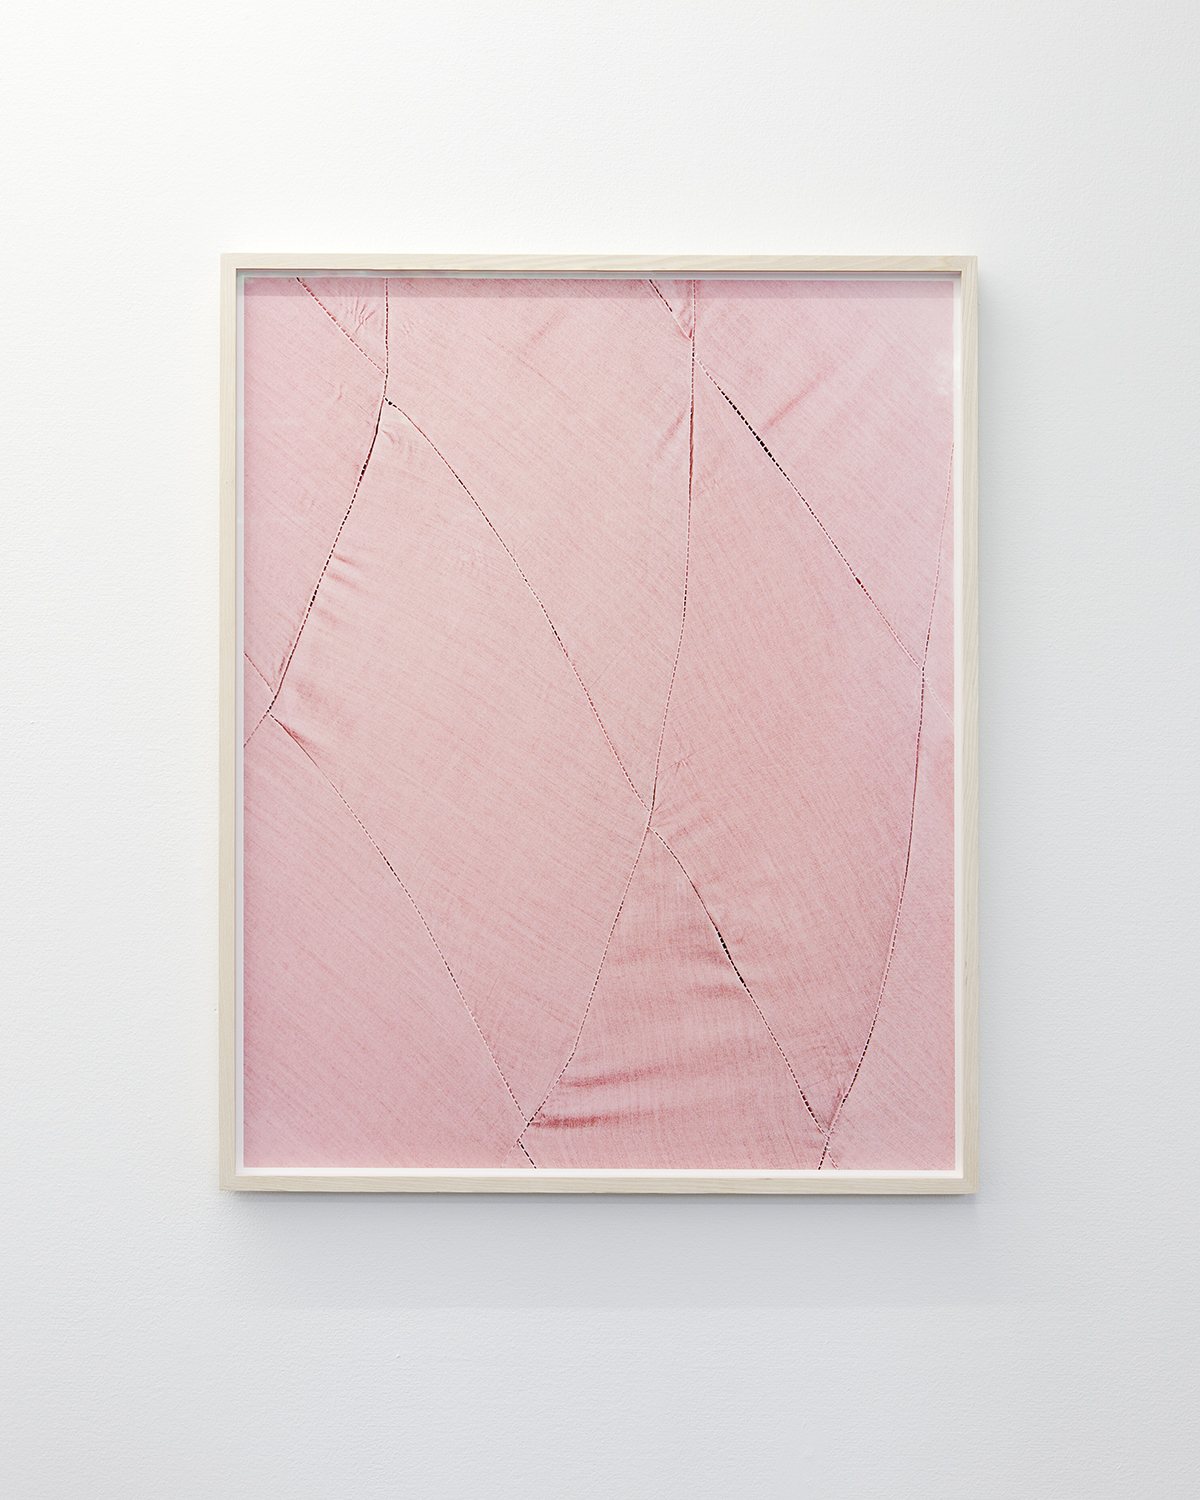 Linda Hofvander, Suggested Shape (pink), 2019, Inkjet print, museum glass, whitewashed frame, 92 x 75 cm, edition of 5